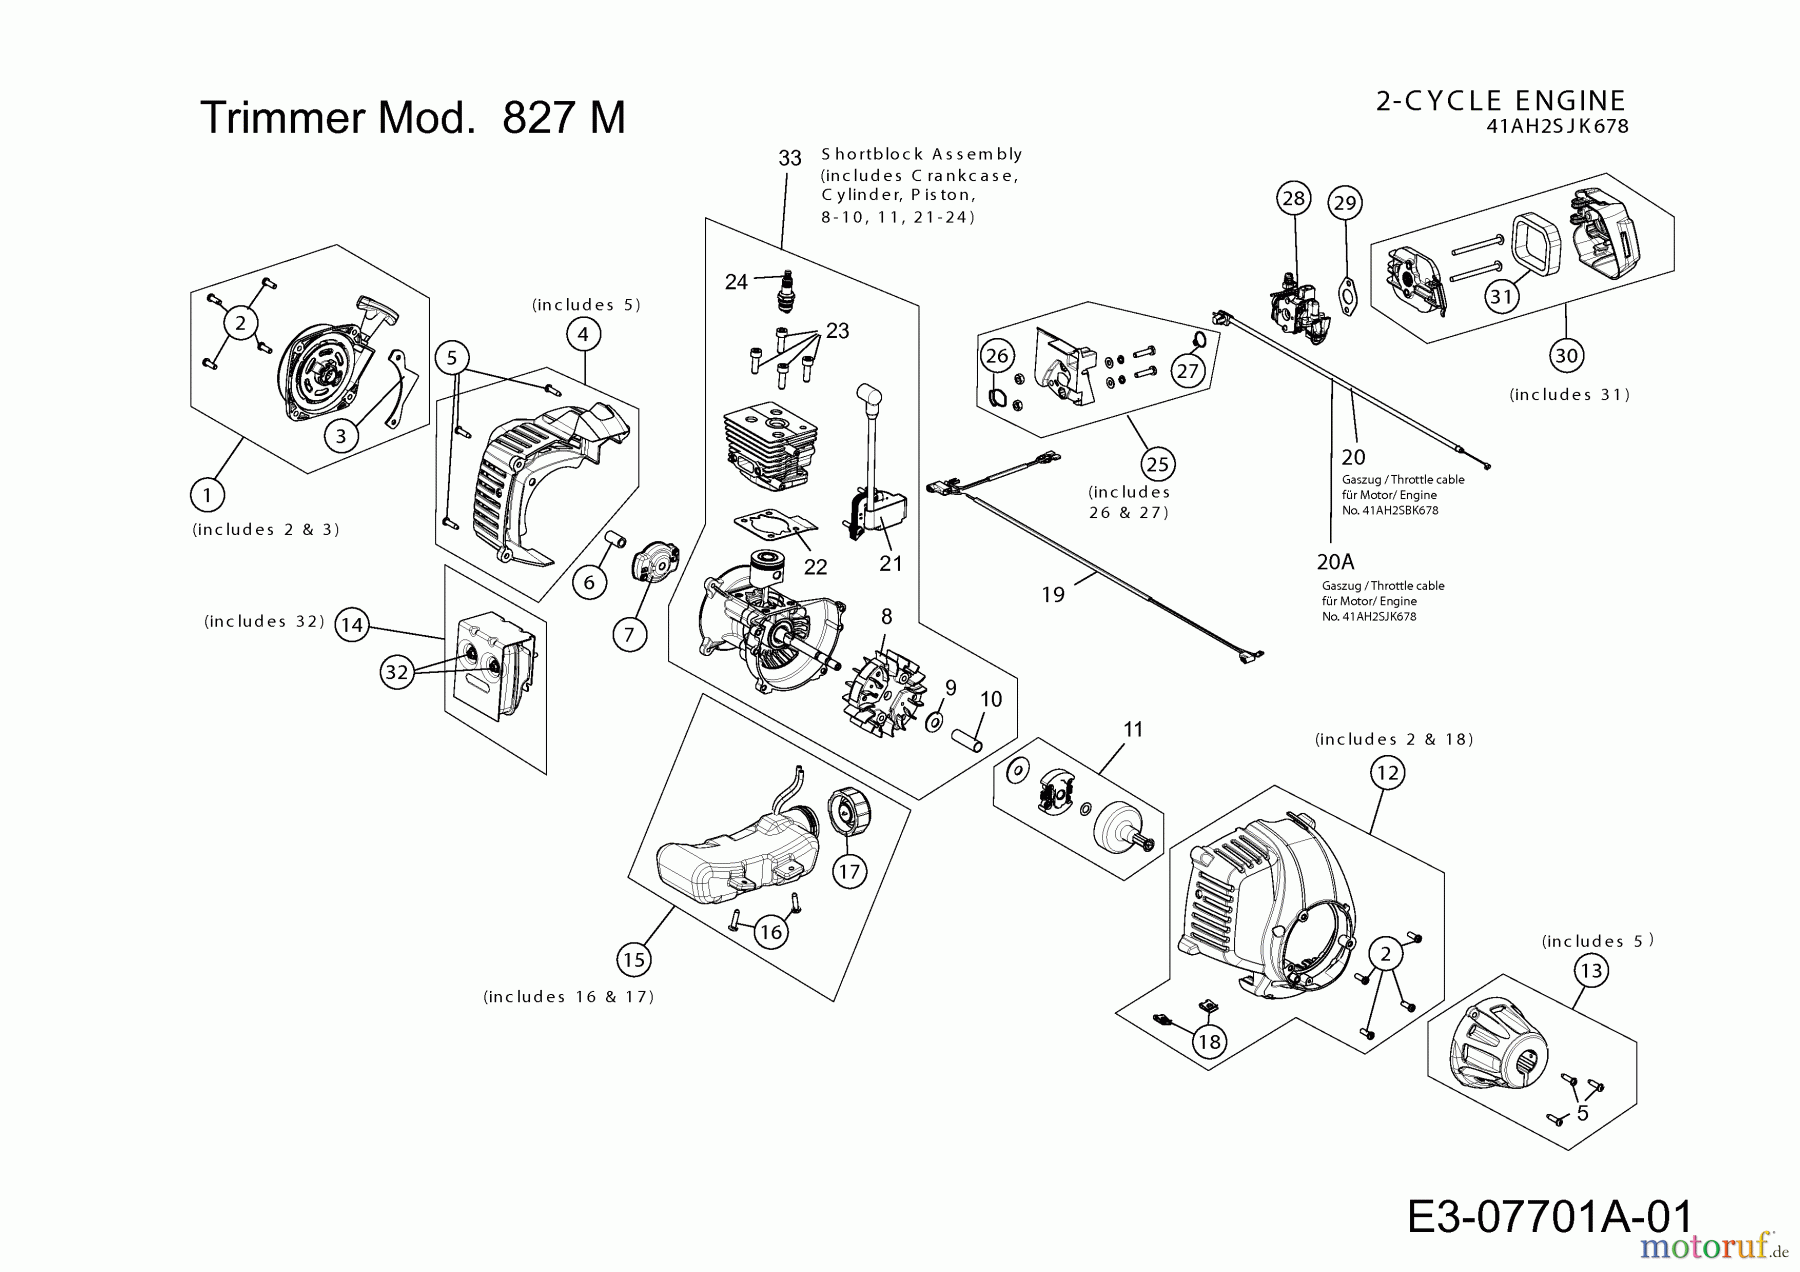  MTD Brush cutter 827 M 41AD7VT-678  (2013) Engine